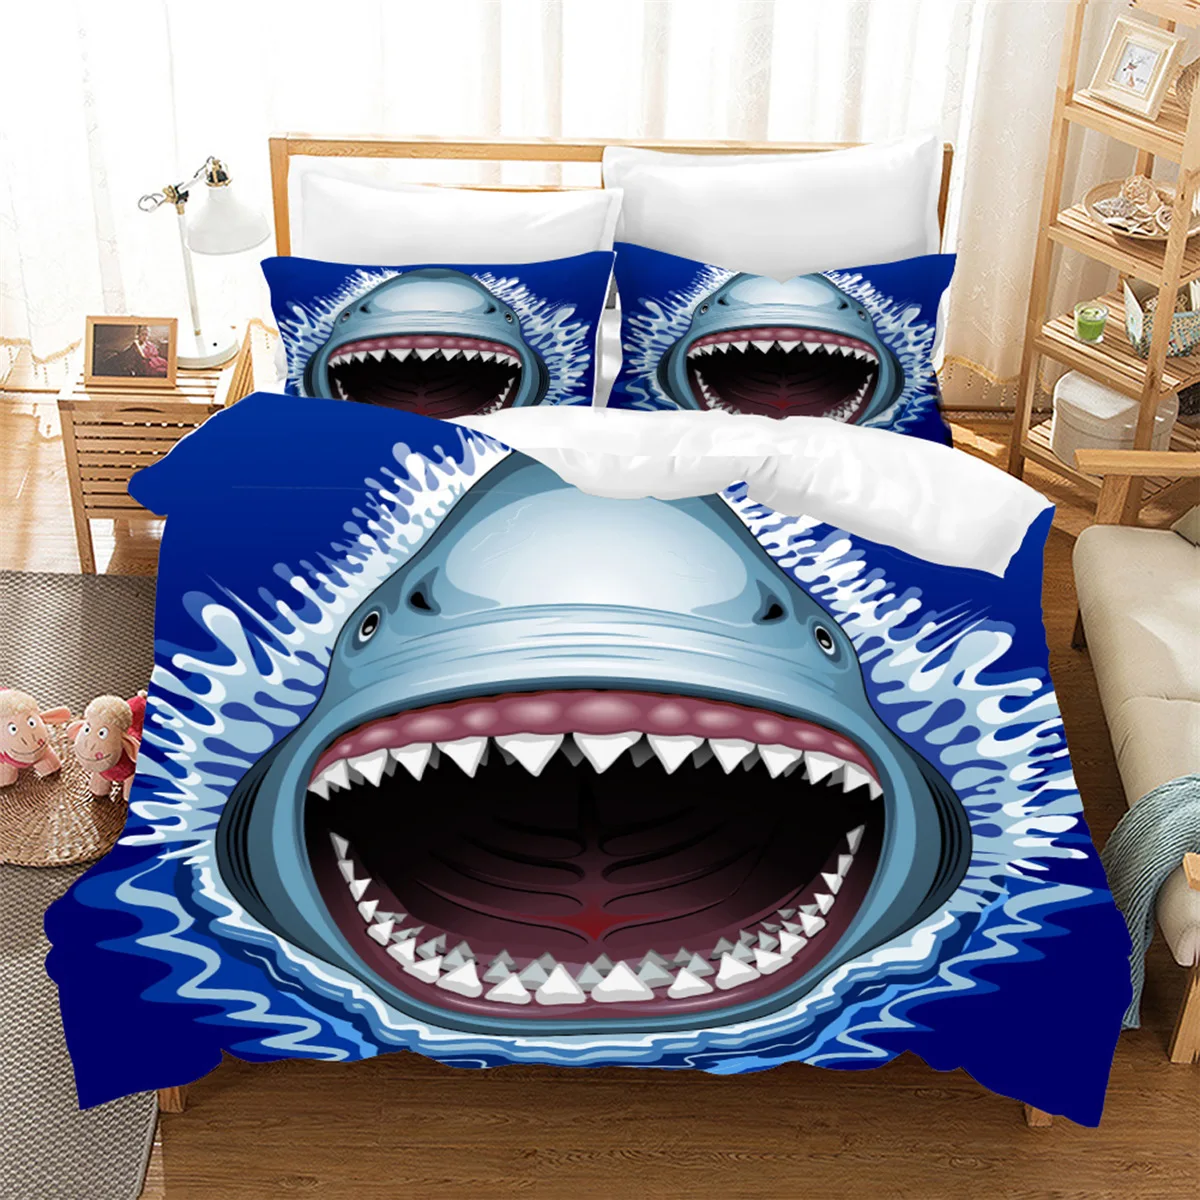 

Shark Fish Duvet Cover King/Queen Size,Hawaiian Ocean Animal Theme Bedding Set for Kids Teens Boy,Underwater Sea Comforter Cover